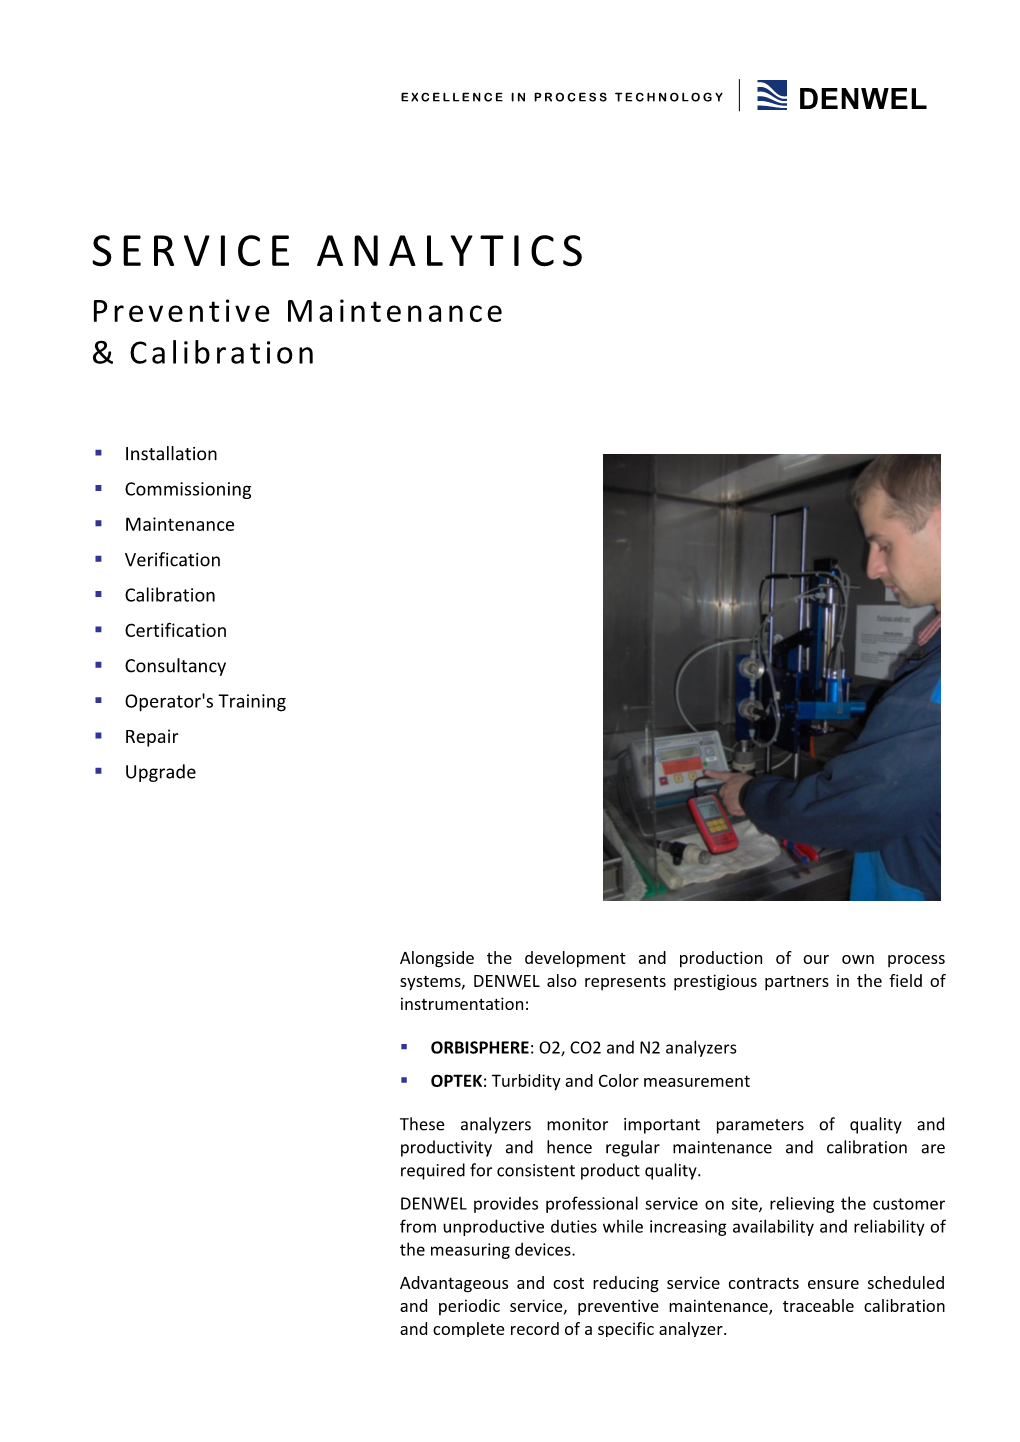 Service Analytics